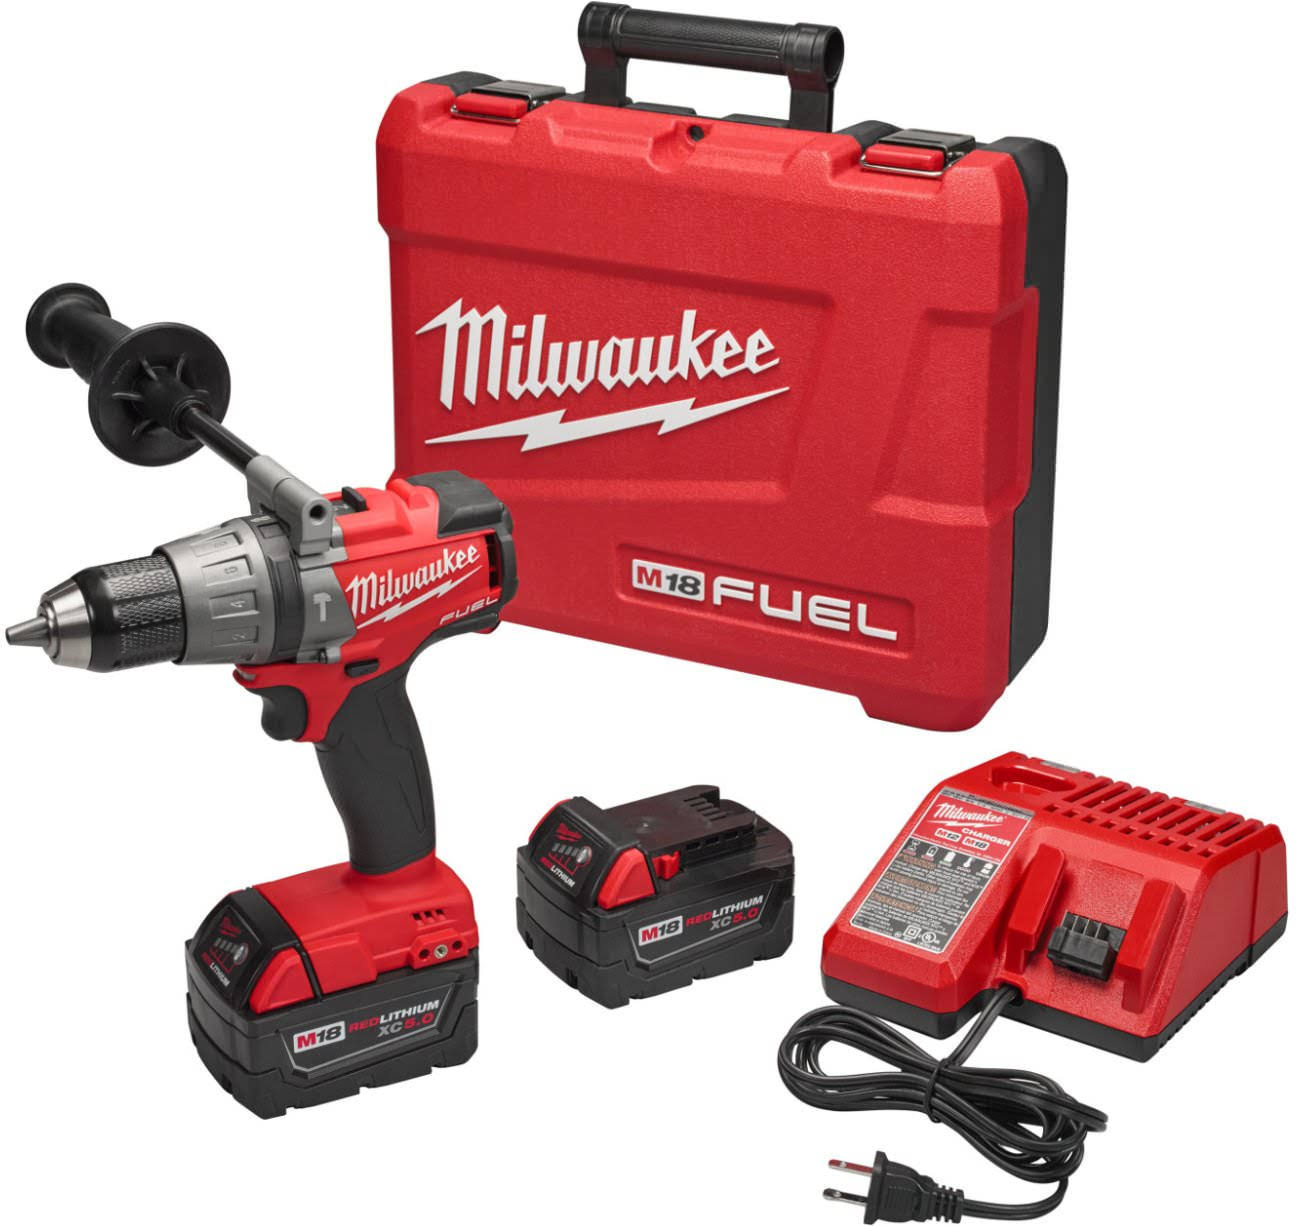 Milwaukee 2704-22 M18 Fuel Hammer Drill Driver Kit